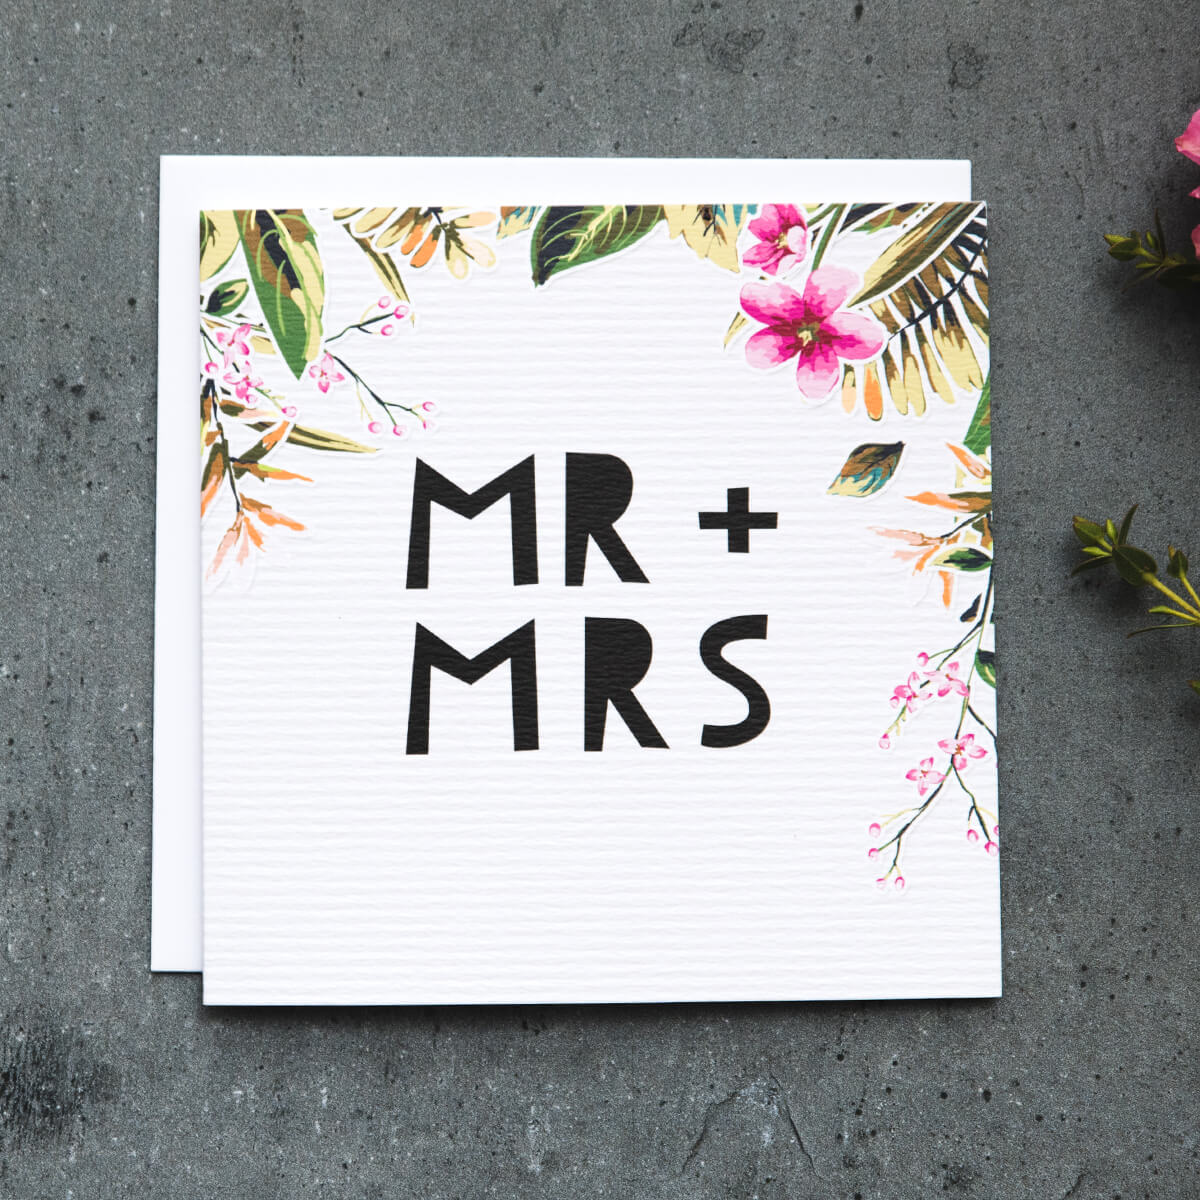 'Mr + Mrs' Tropical Wedding Card - I am Nat Ltd - Greeting Card